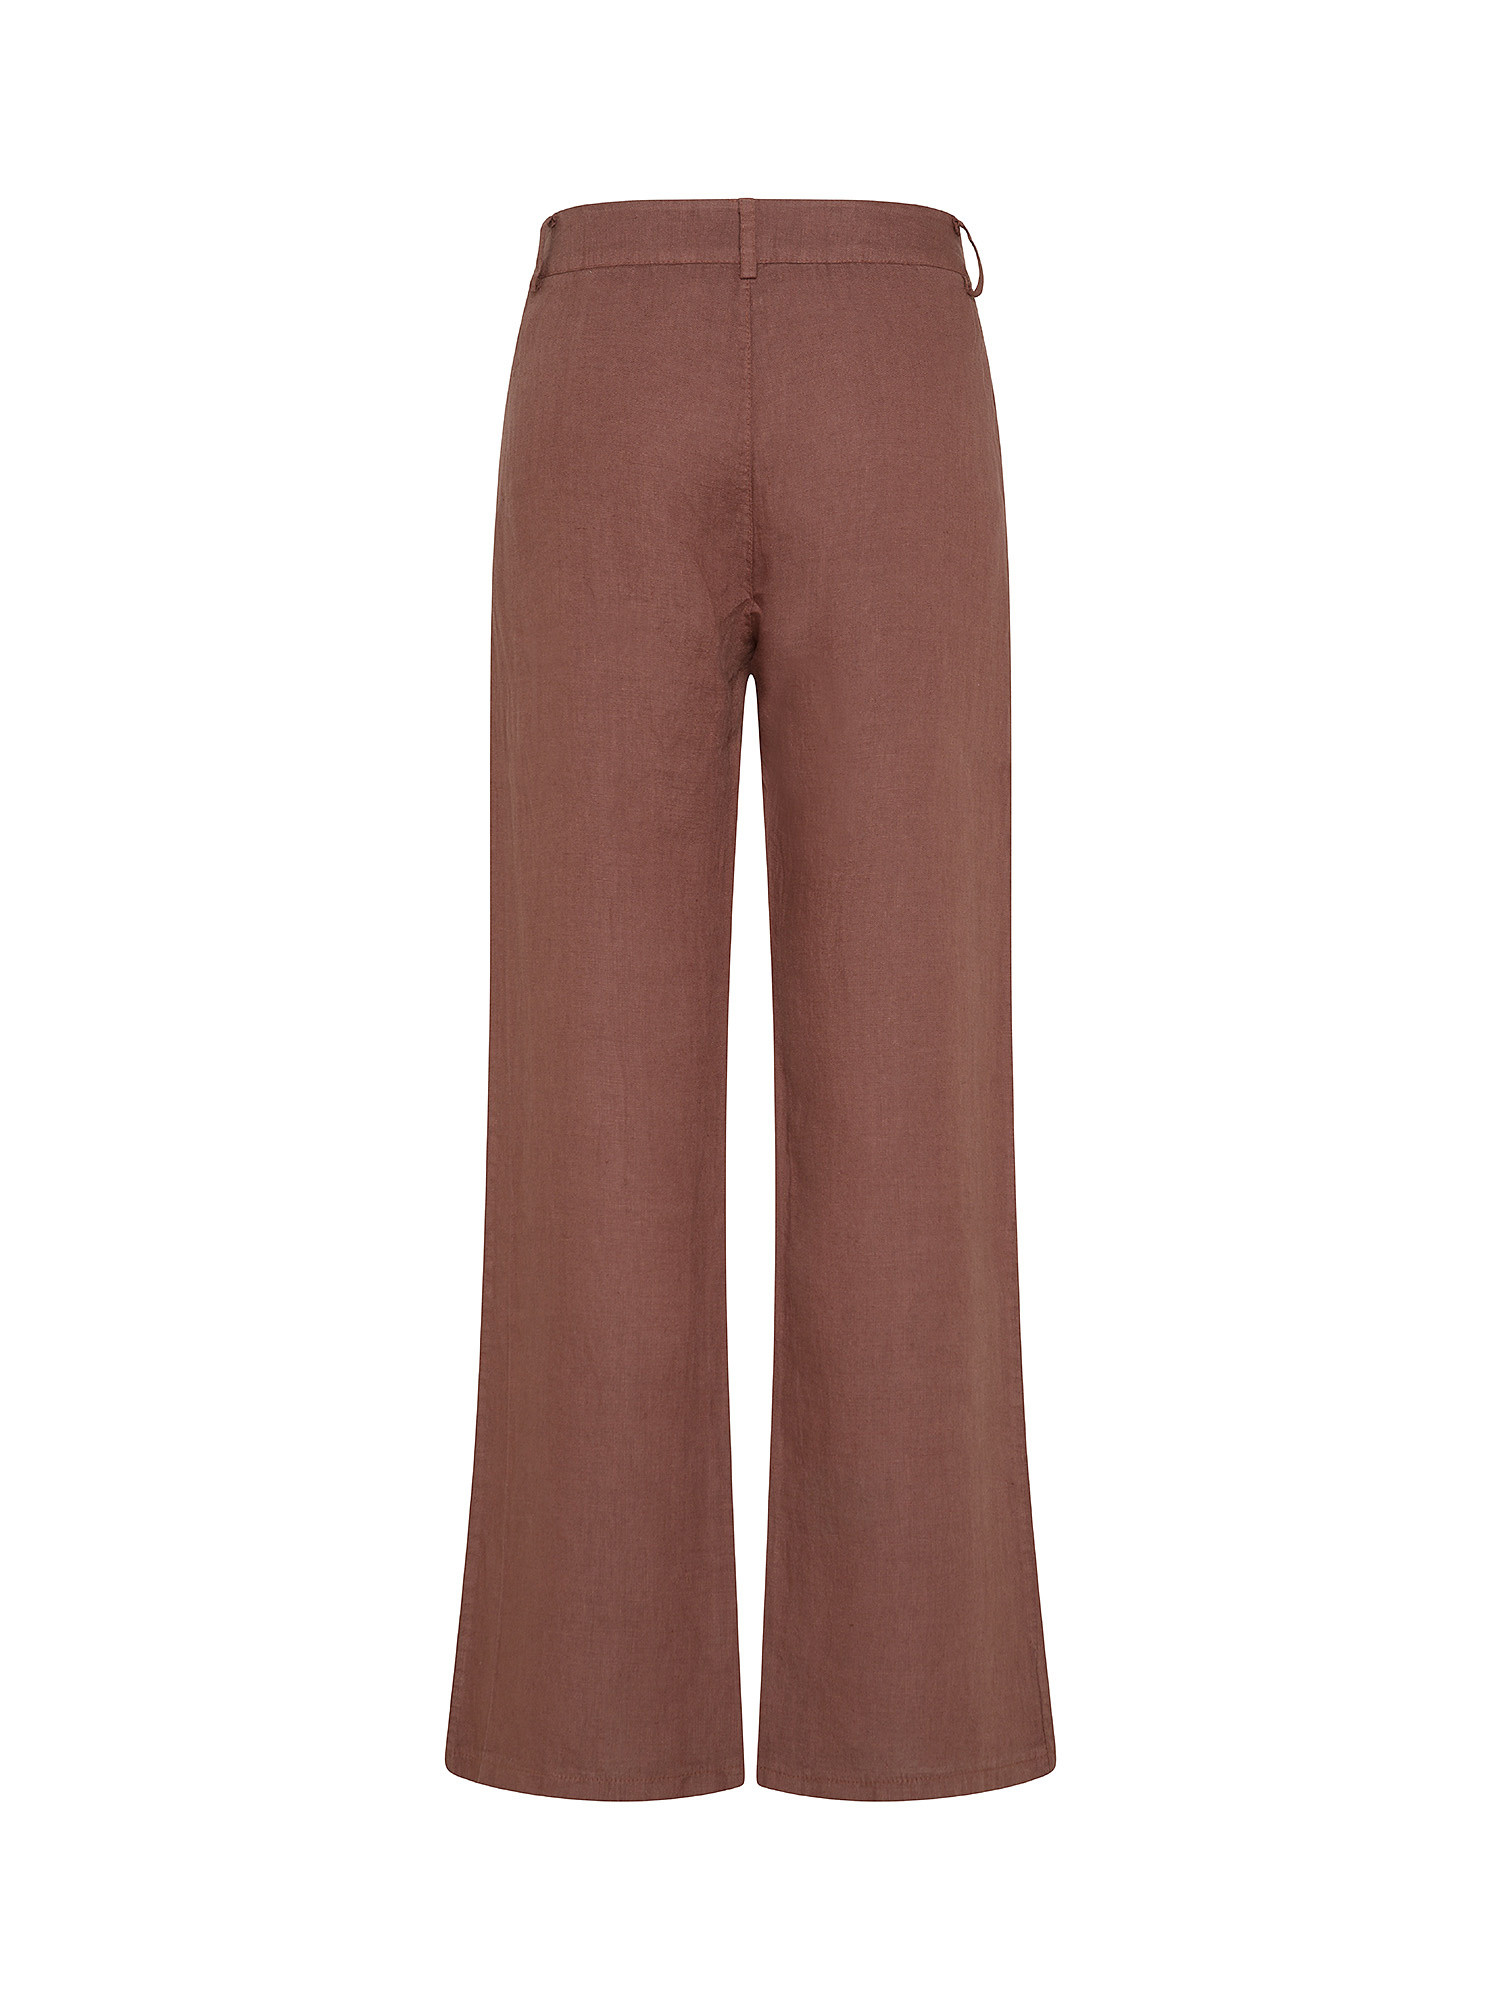 Koan - Pantaloni in lino con pinces, Marrone, large image number 1